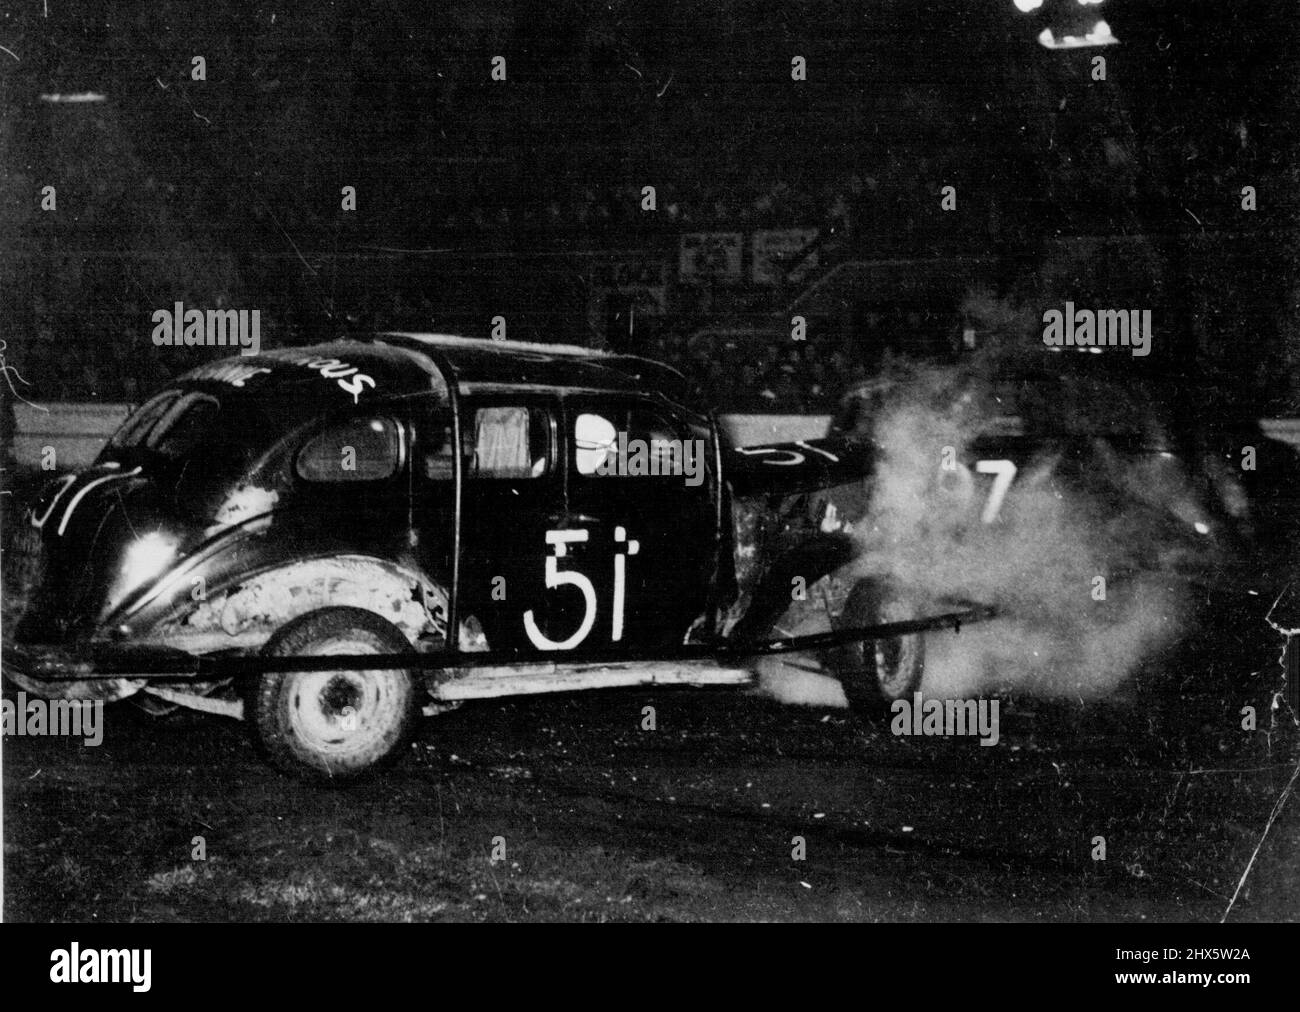 Historic Car Crash Black And White Stock Photos Images Alamy